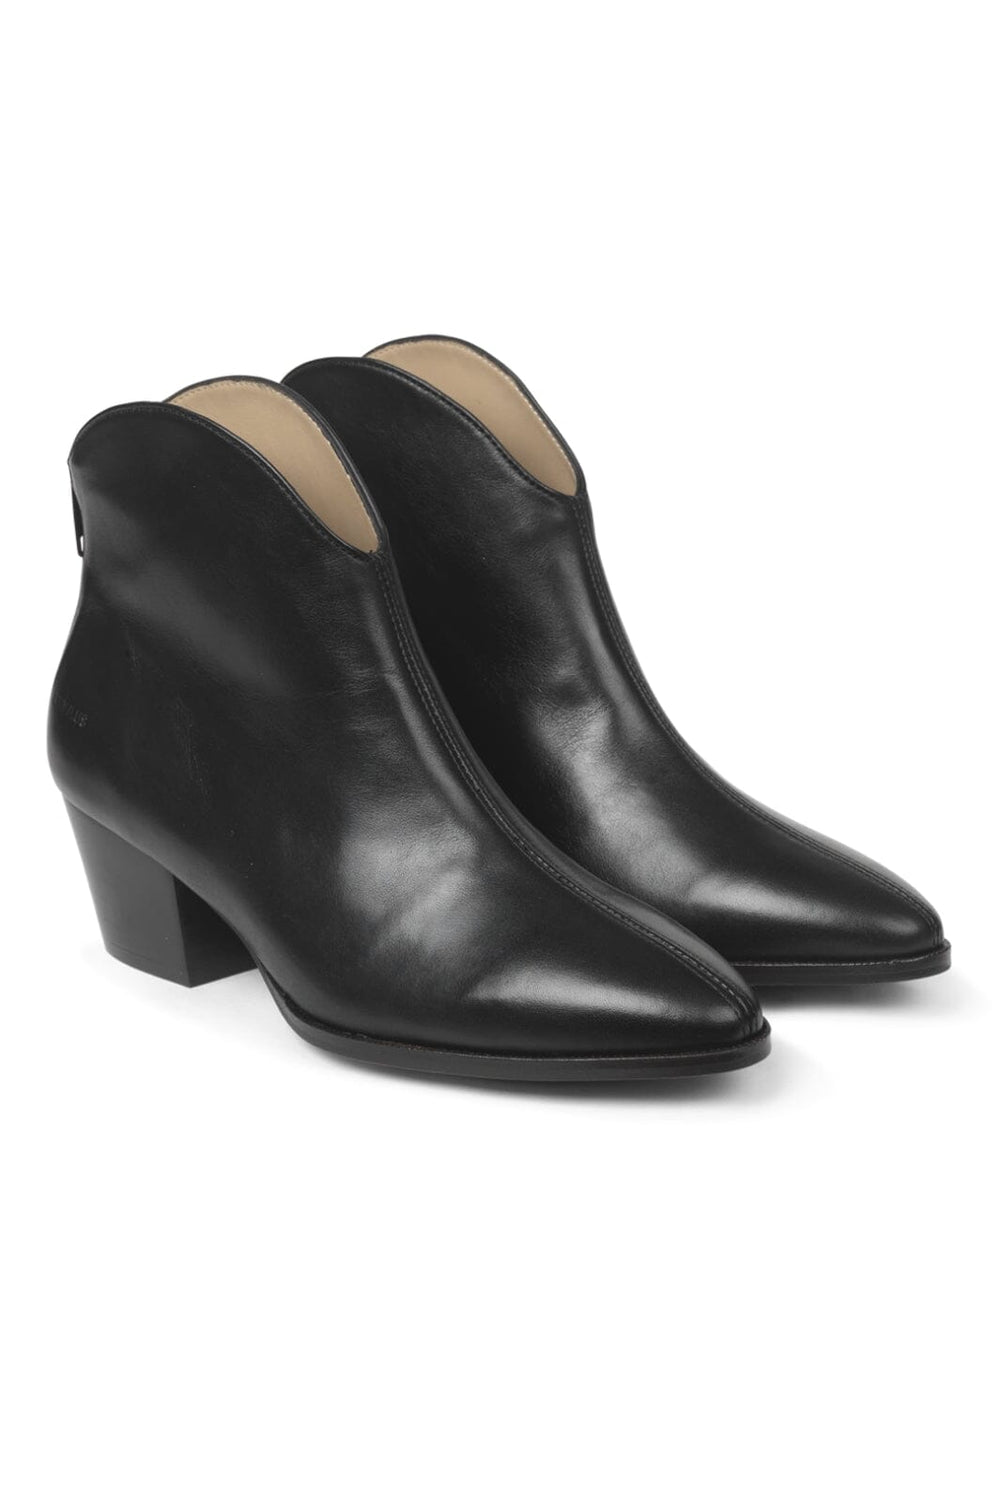 Angulus - Boot with heel - 1604 Black Støvler 